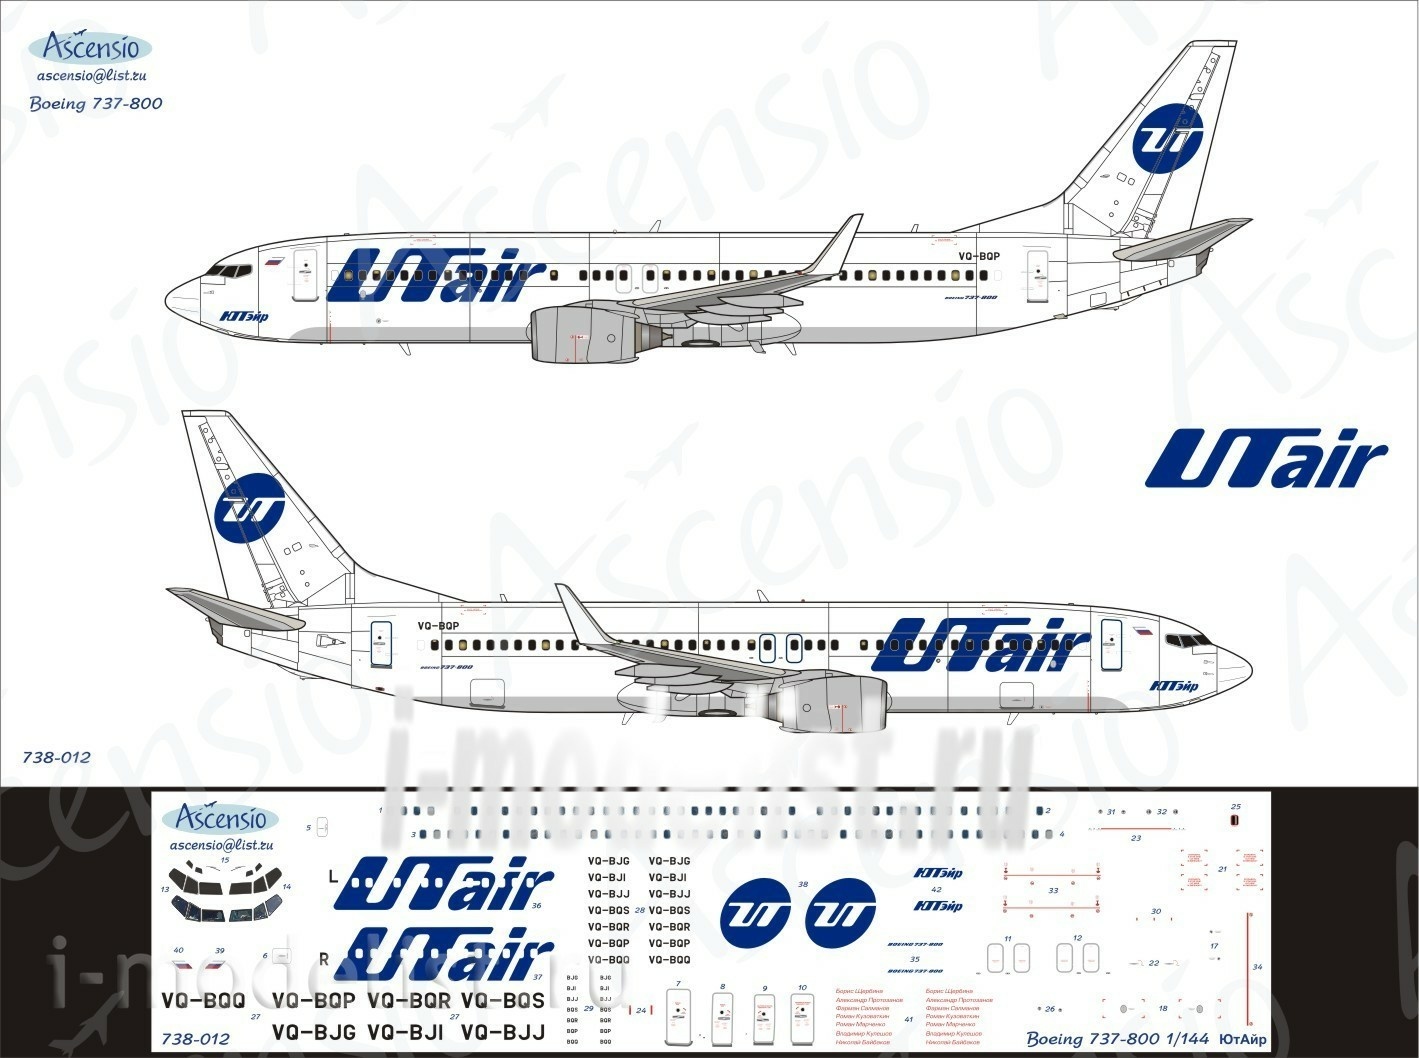 738-012 Ascensio 1/144 Декаль на самолет боенг 737-800 (ютайр)